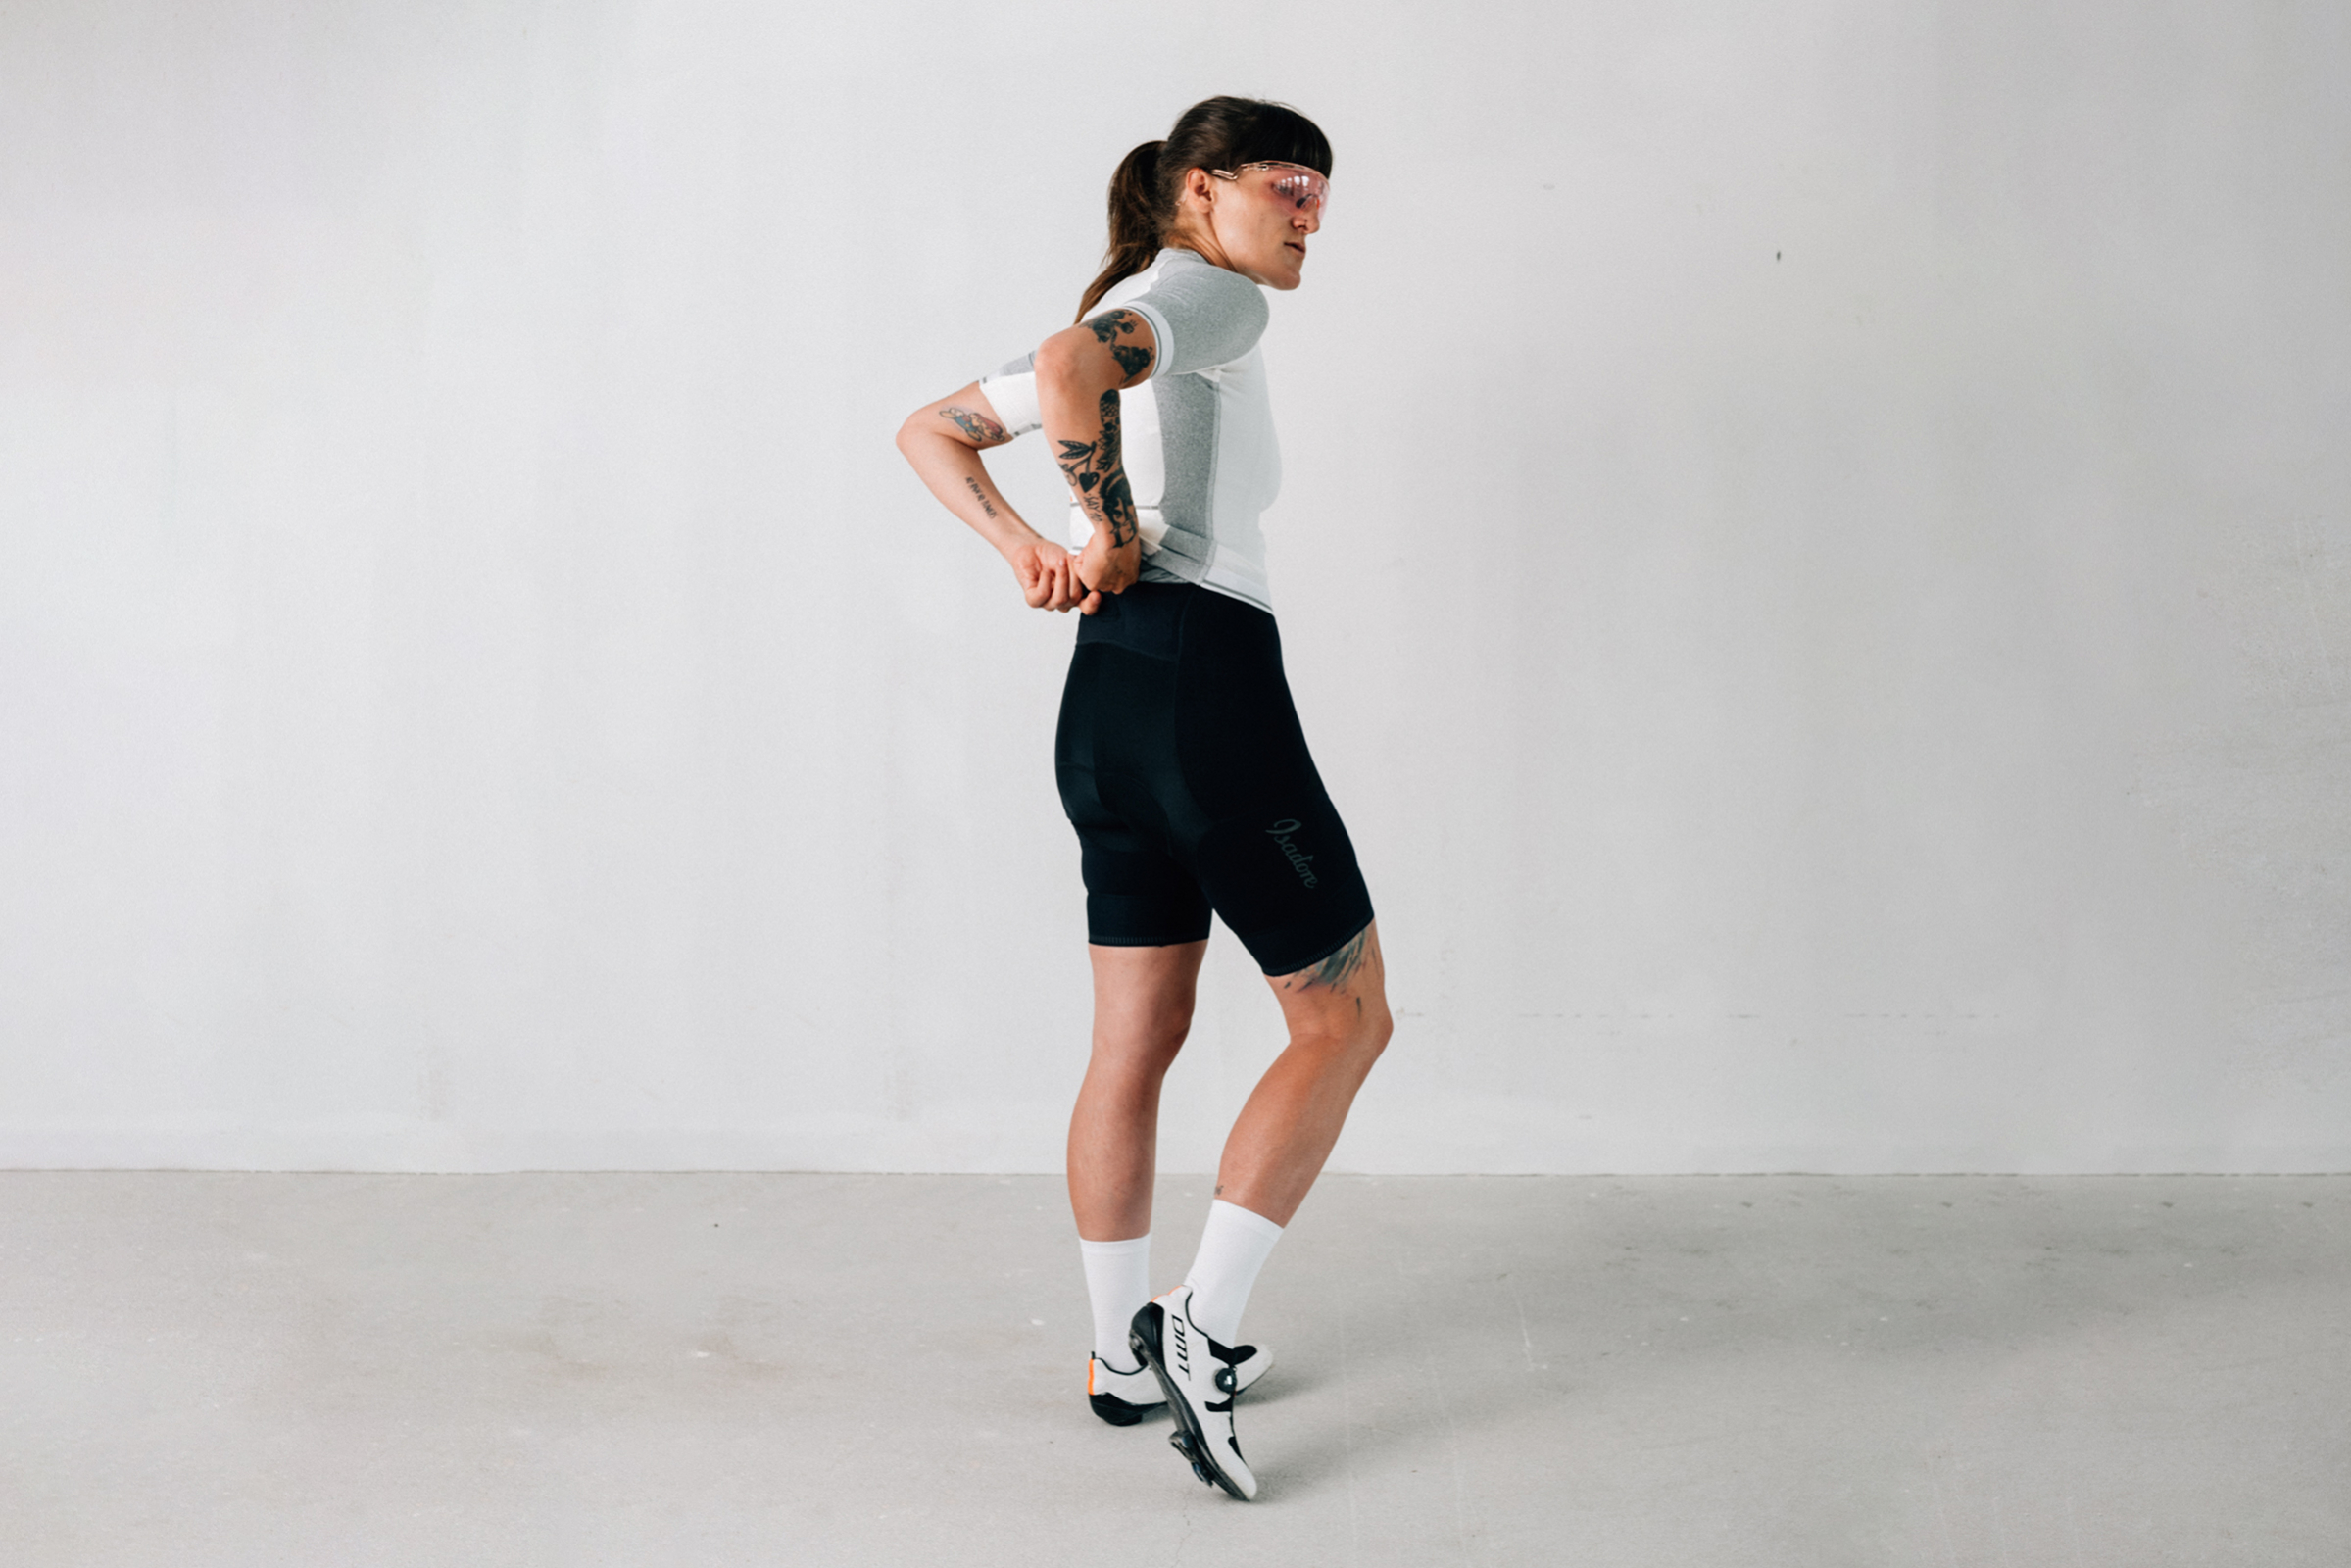 Women's Signature Clippee System Bib Shorts 1.0